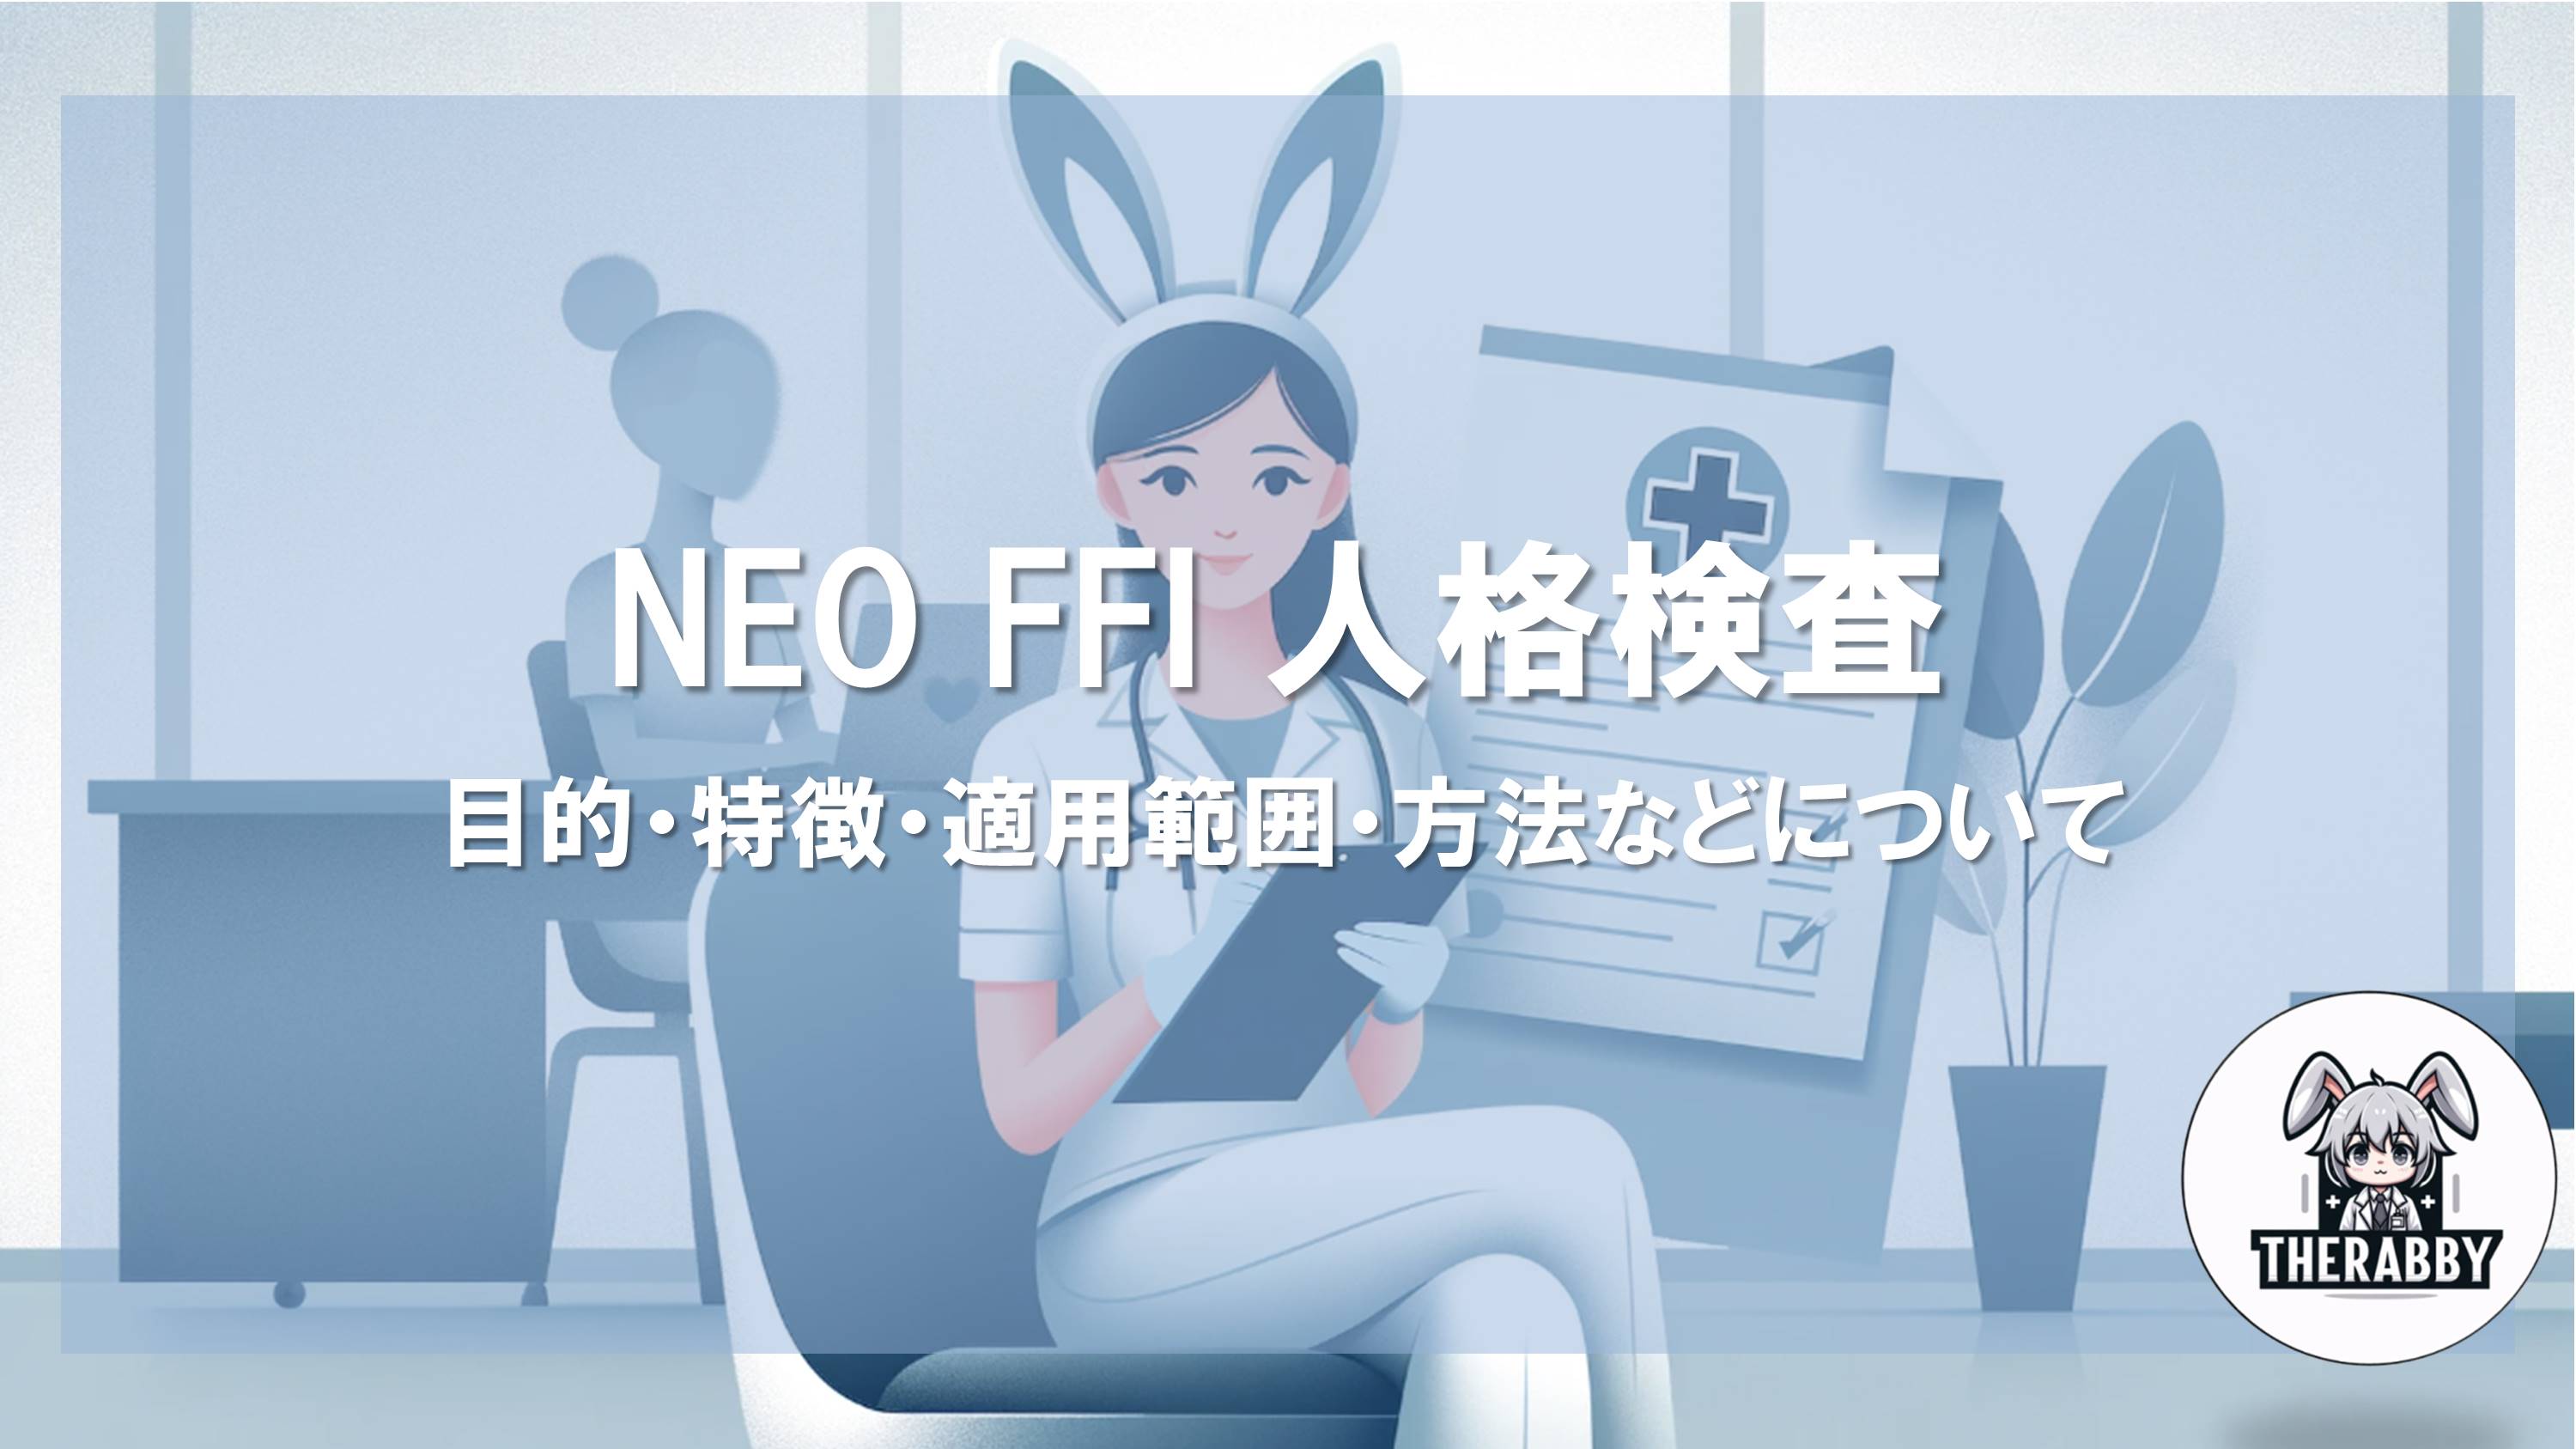 NEO FFI 人格検査 - 目的・特徴・方法などについて